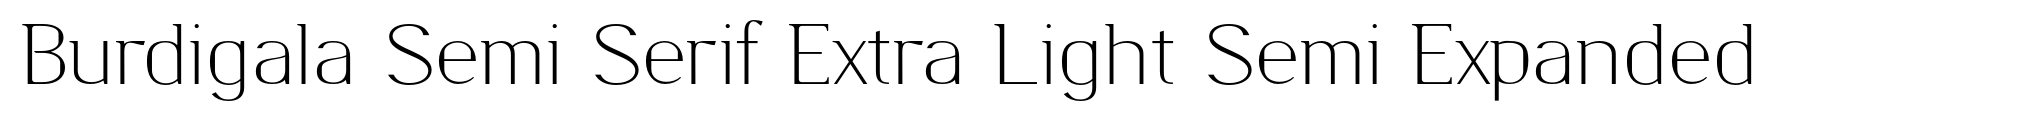 Burdigala Semi Serif Extra Light Semi Expanded image